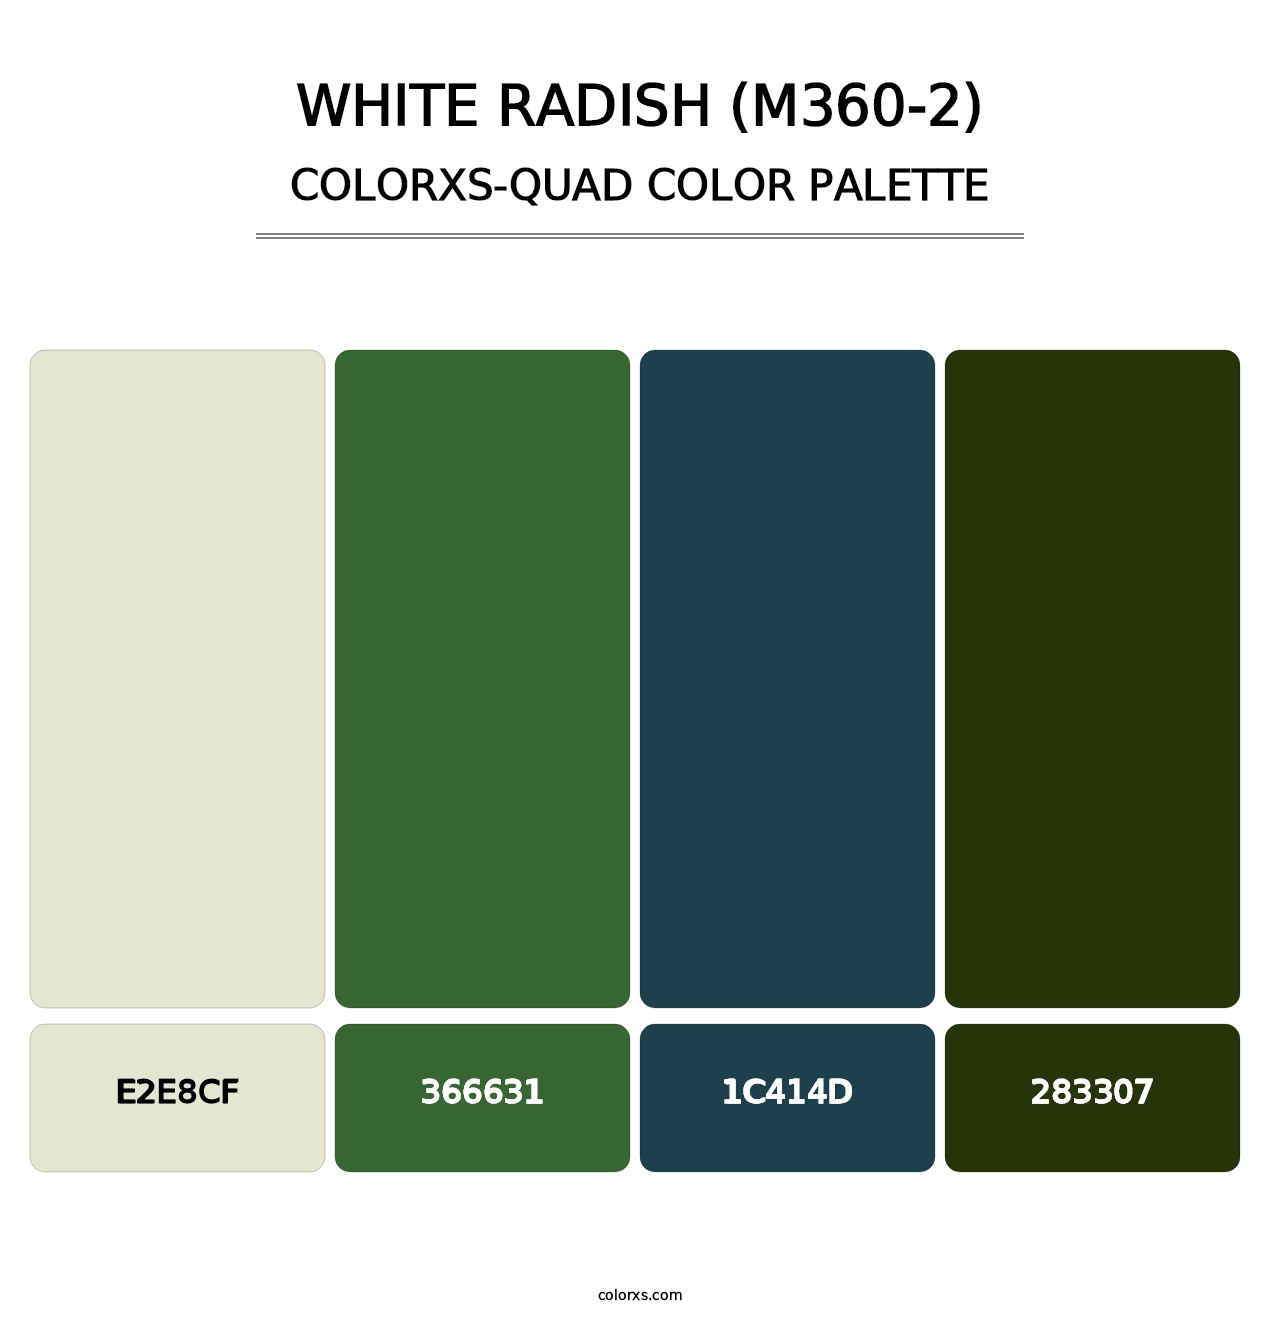 White Radish (M360-2) - Colorxs Quad Palette